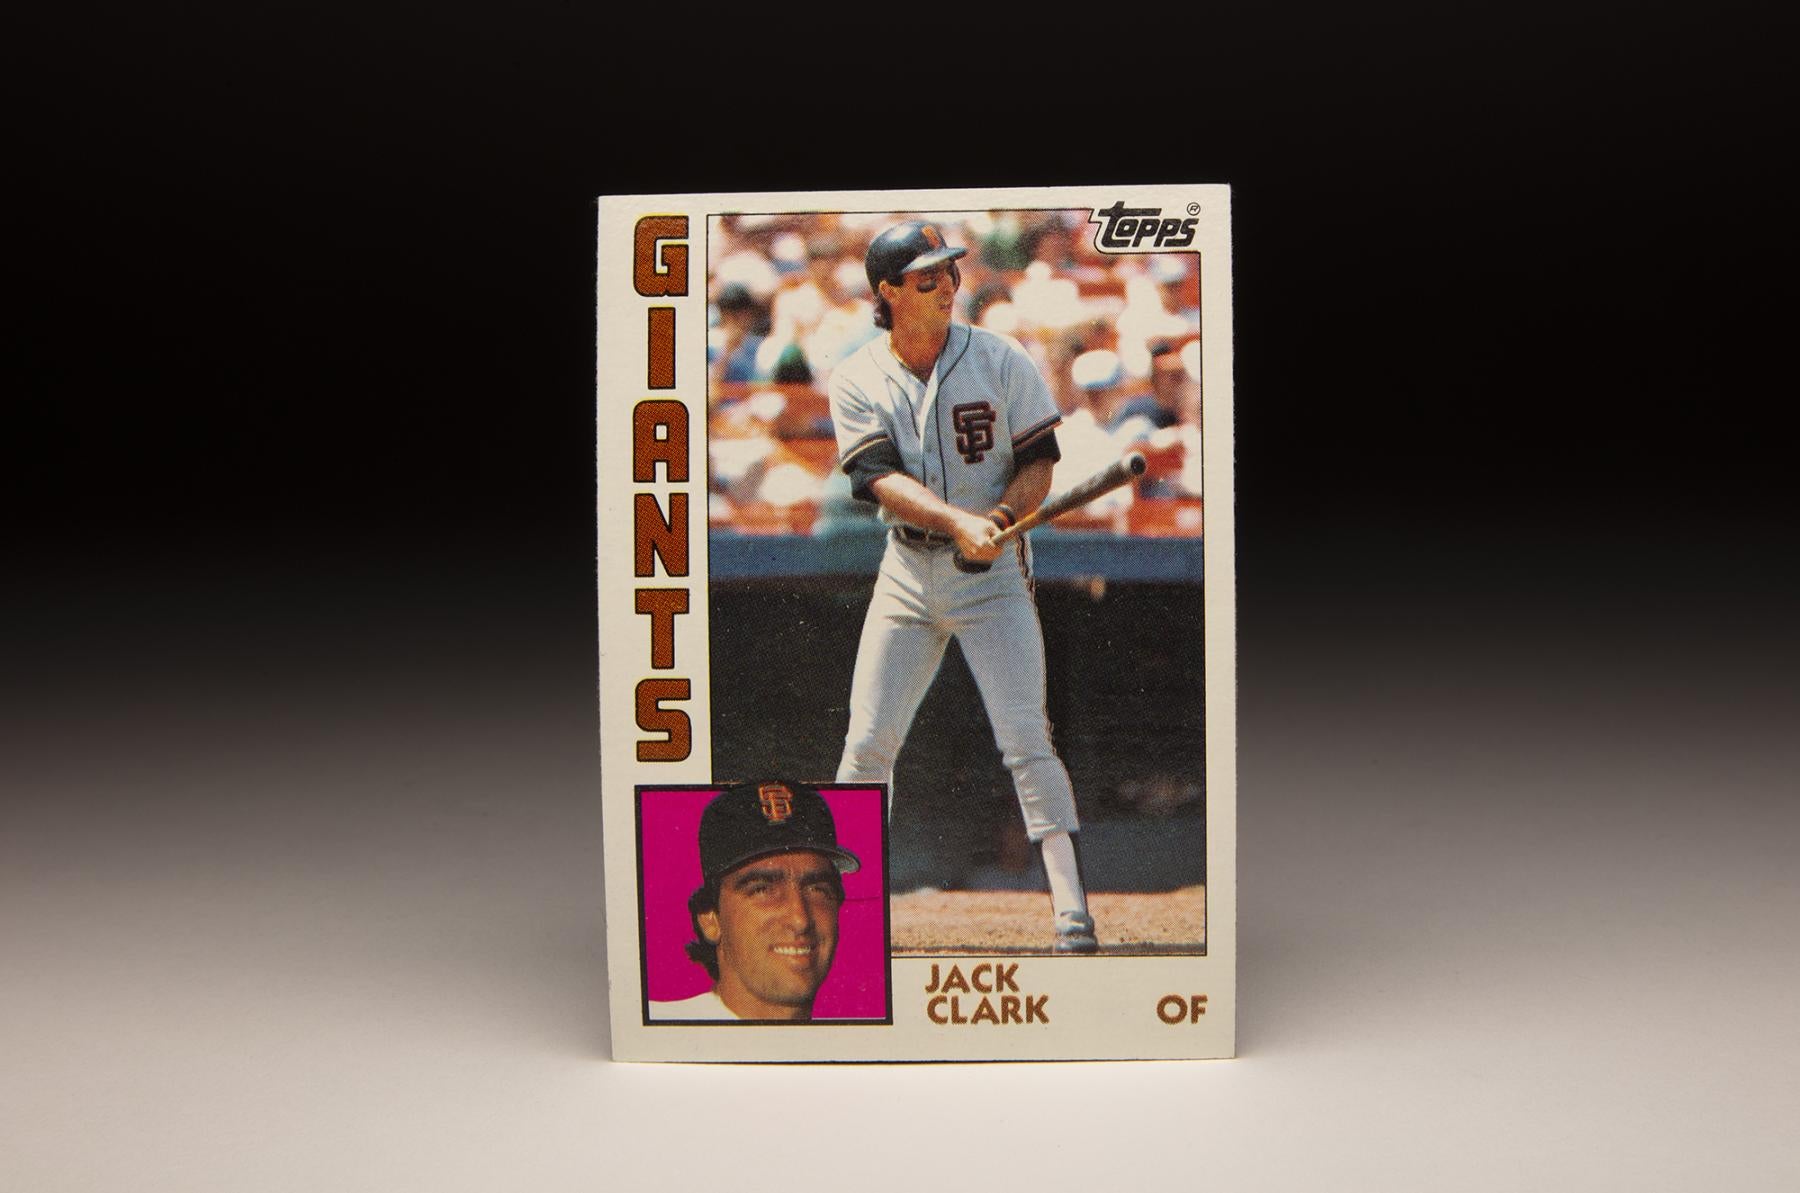 1982 Topps Traded San Francisco Giants Team Set of 6 Baseball Cards